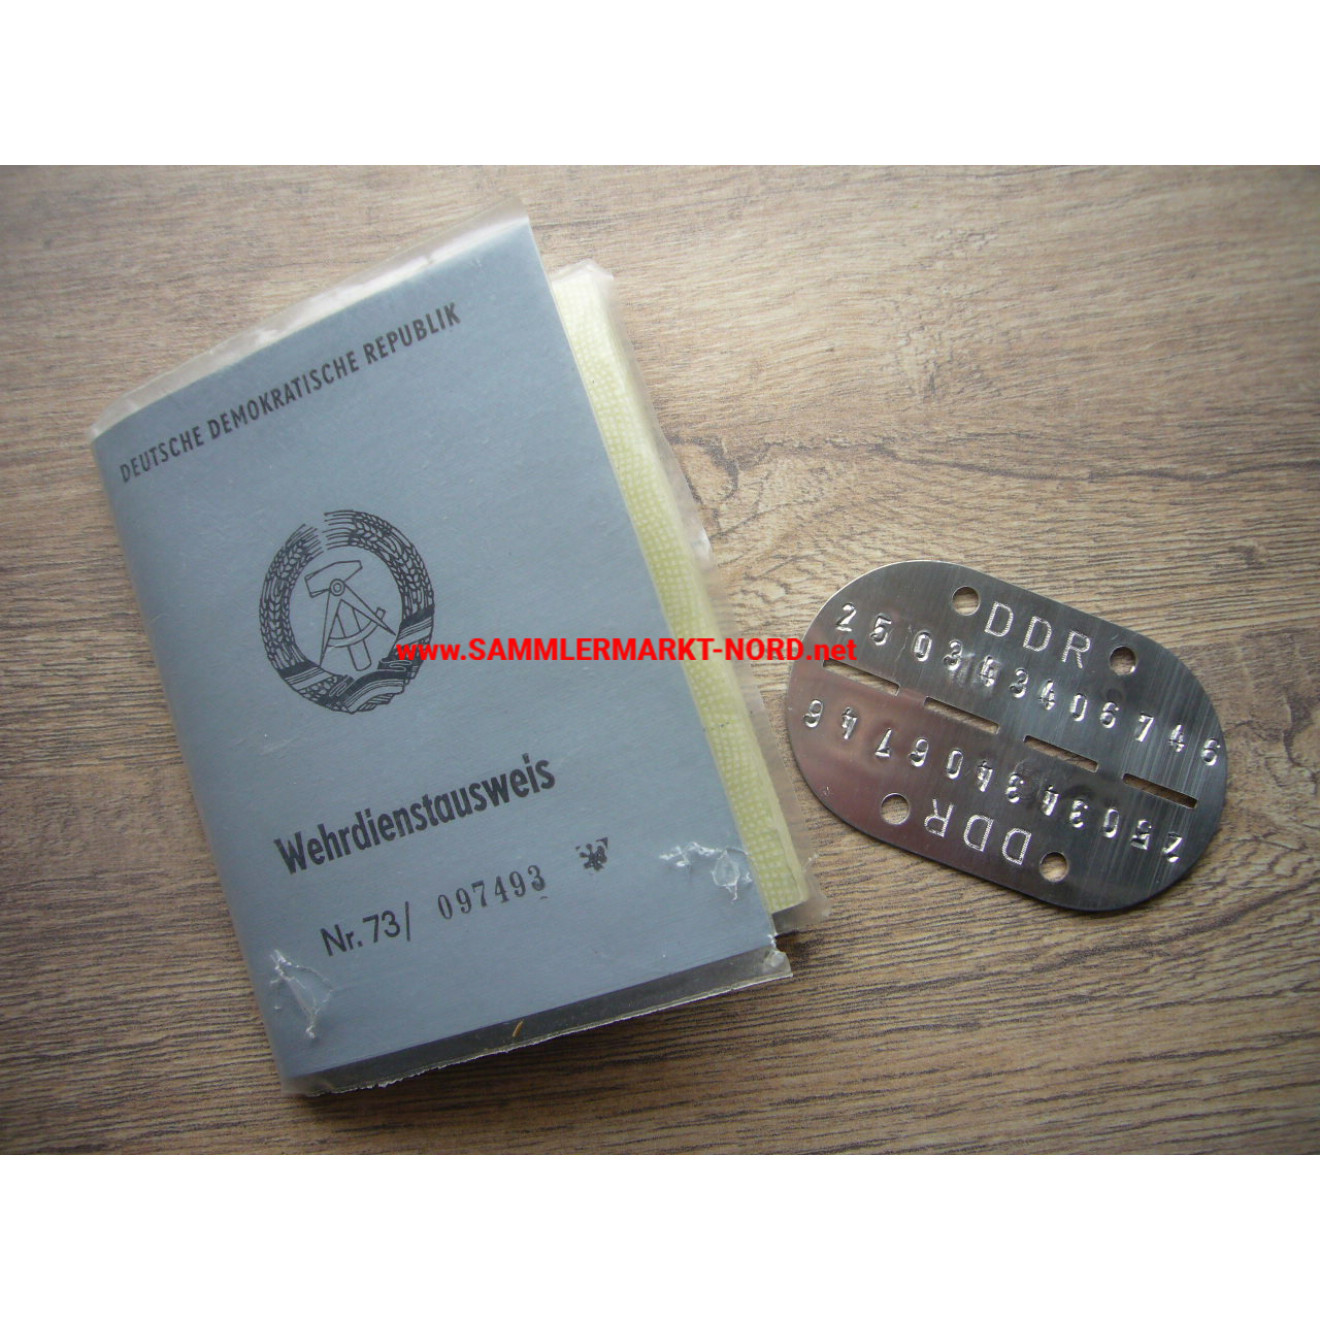 GDR - military service ID card & Dog tag